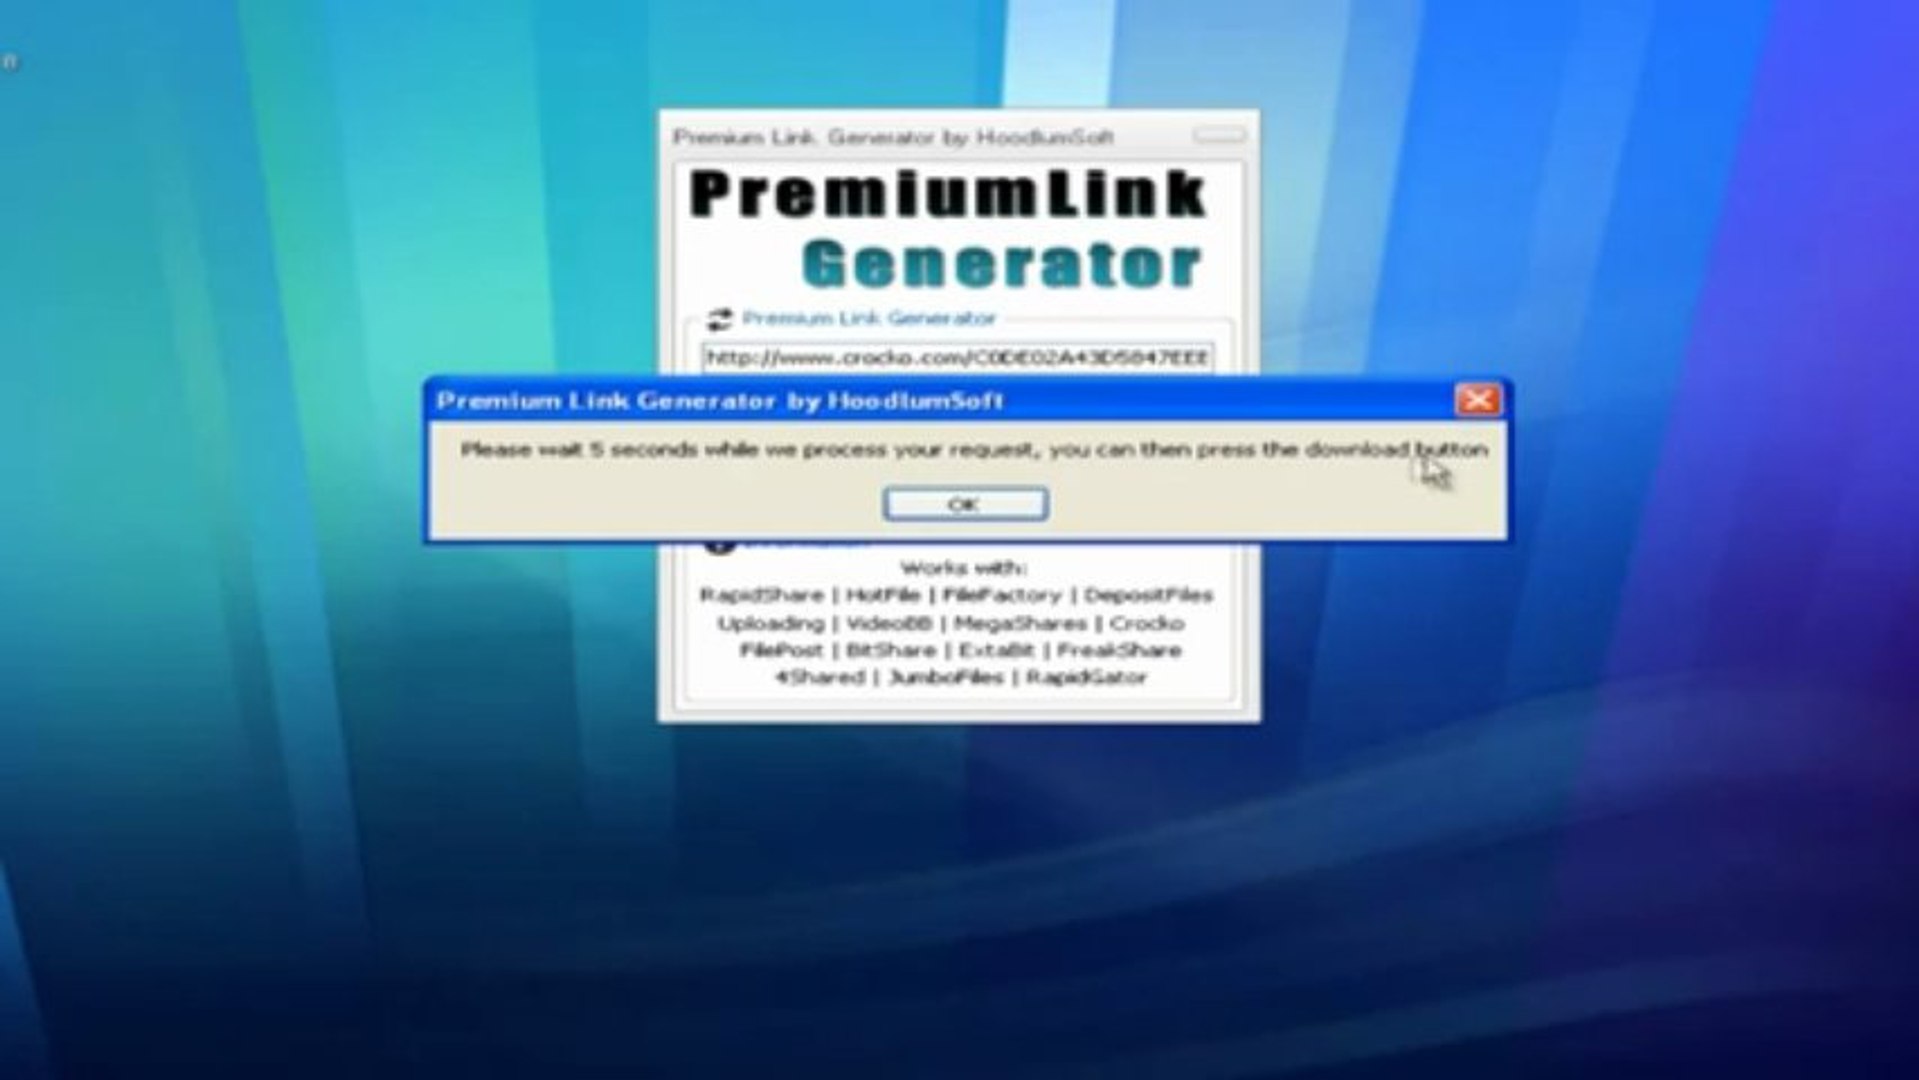 FREE] Premium Link Generator _ Download as a premium user! _ 100% Working  [PROOF] - video Dailymotion